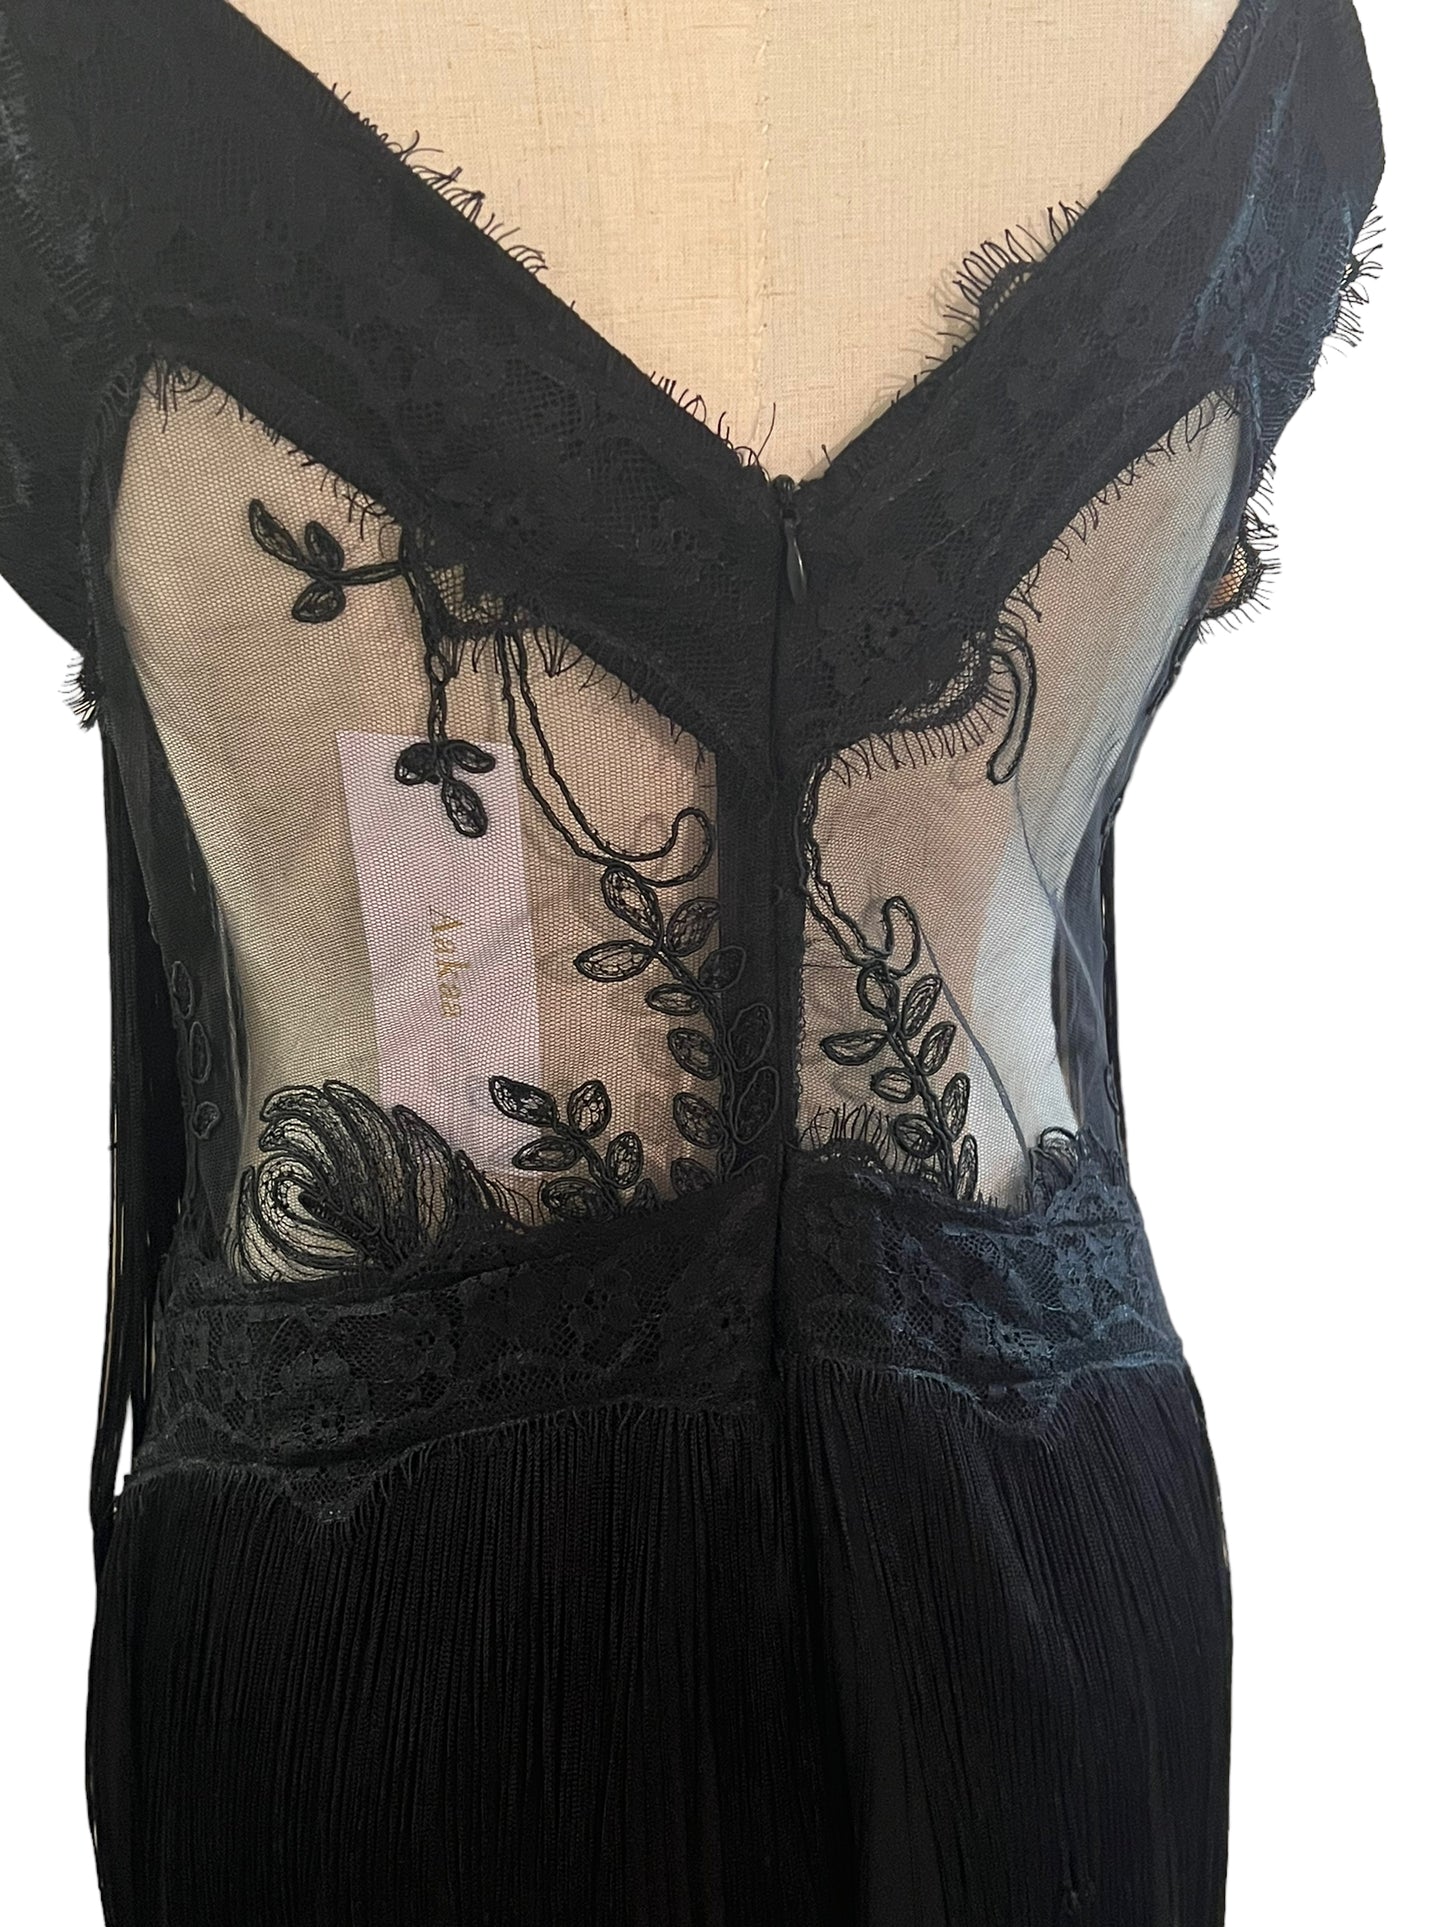 Aakaa Size L Black Fringe Lace Dress